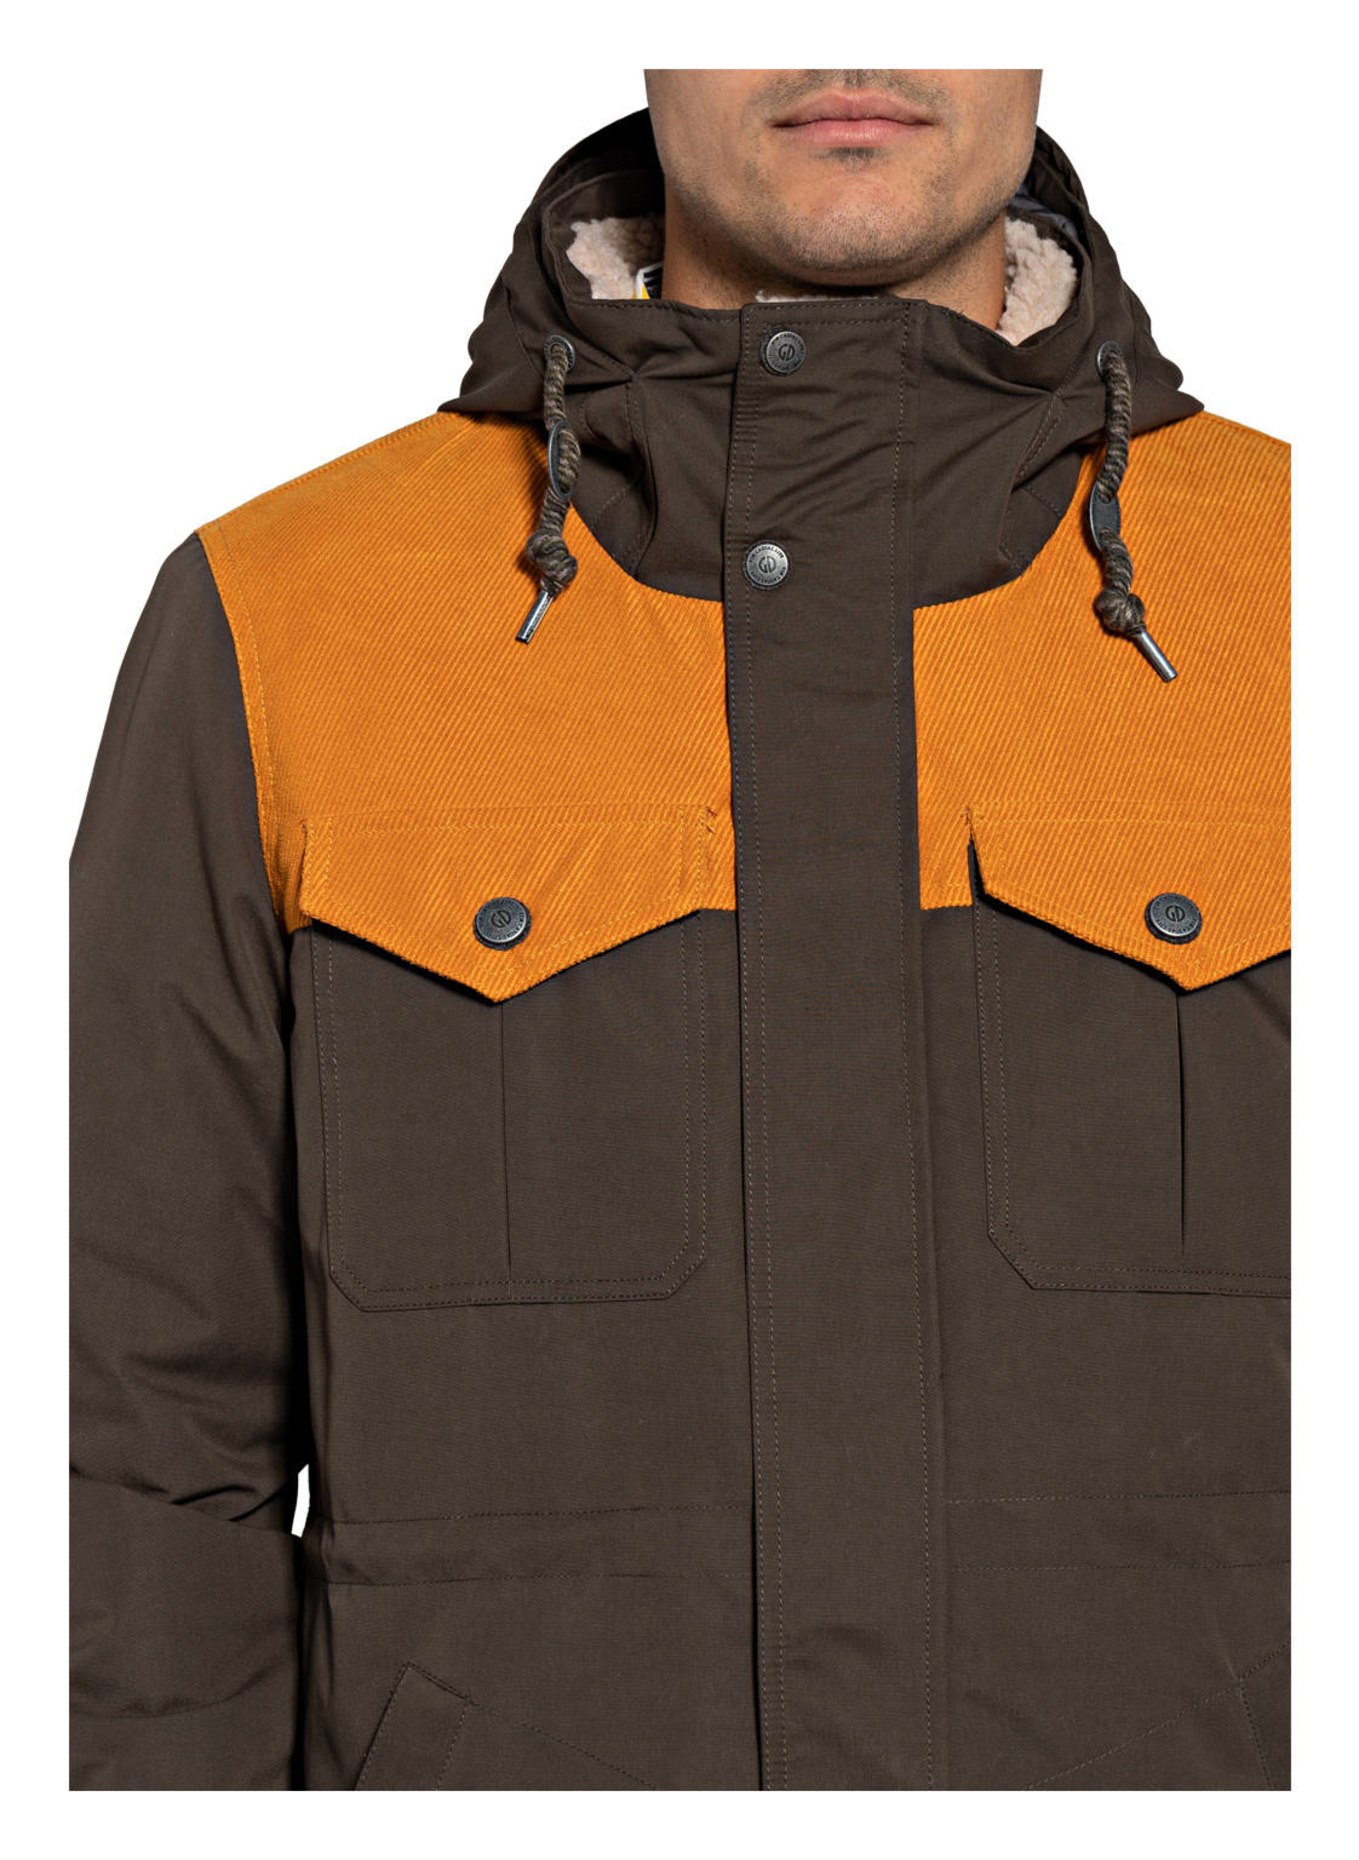 G.I.G.A. brown/ killtec STORMIGA by orange jacket dark DX in Outdoor